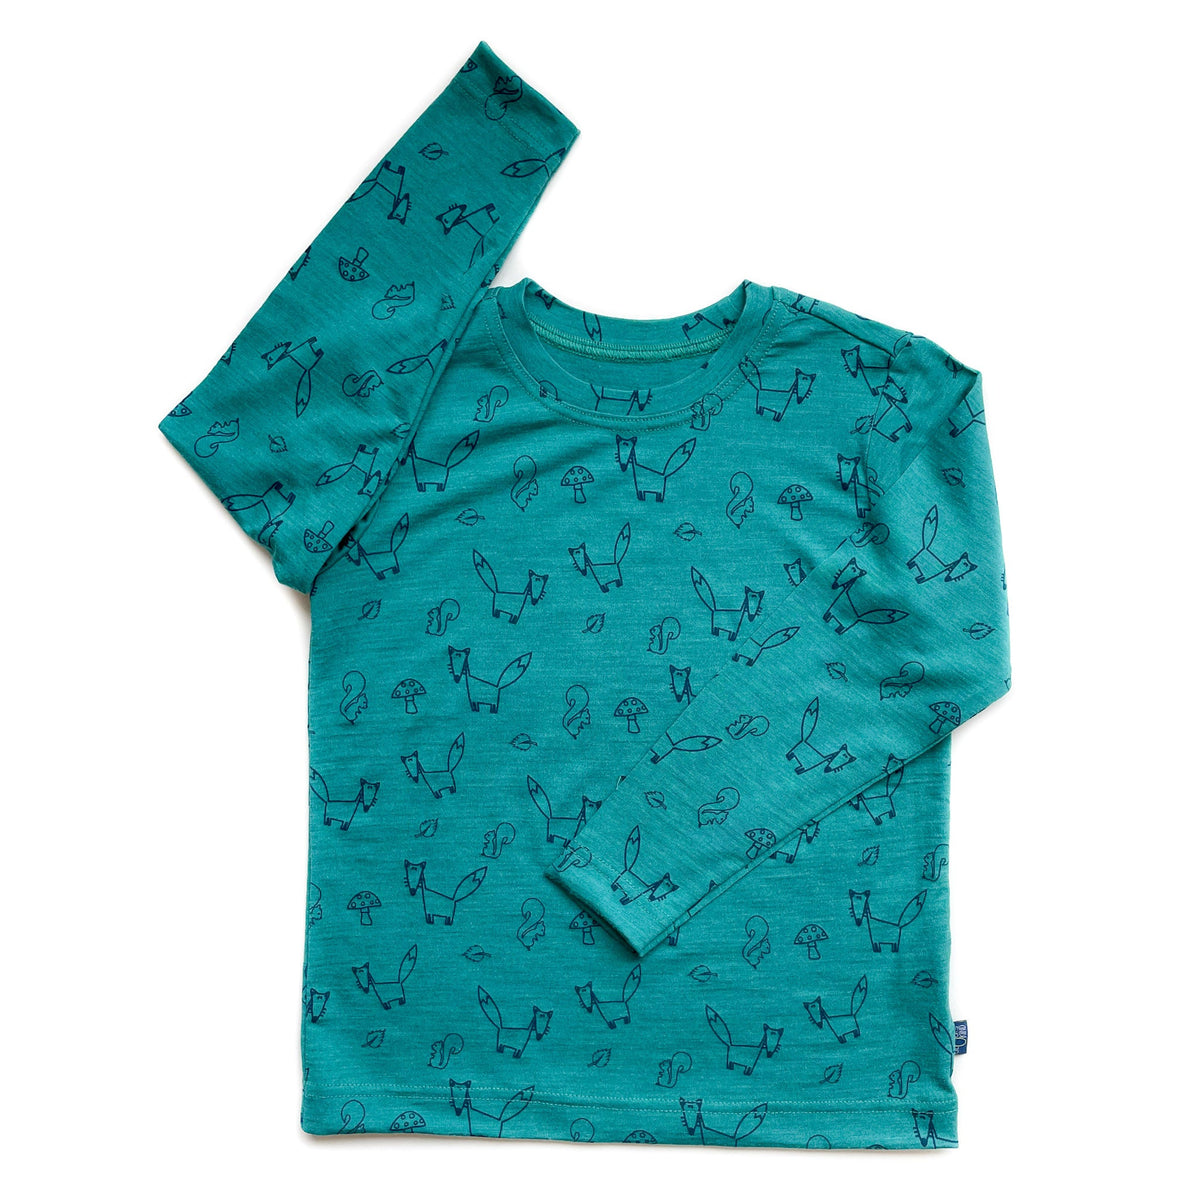 Shirt smaragd mit Fuchs-Print, Merinowolle & Seide (bio/GOTS) - Glückskind - Shirt - 110-116